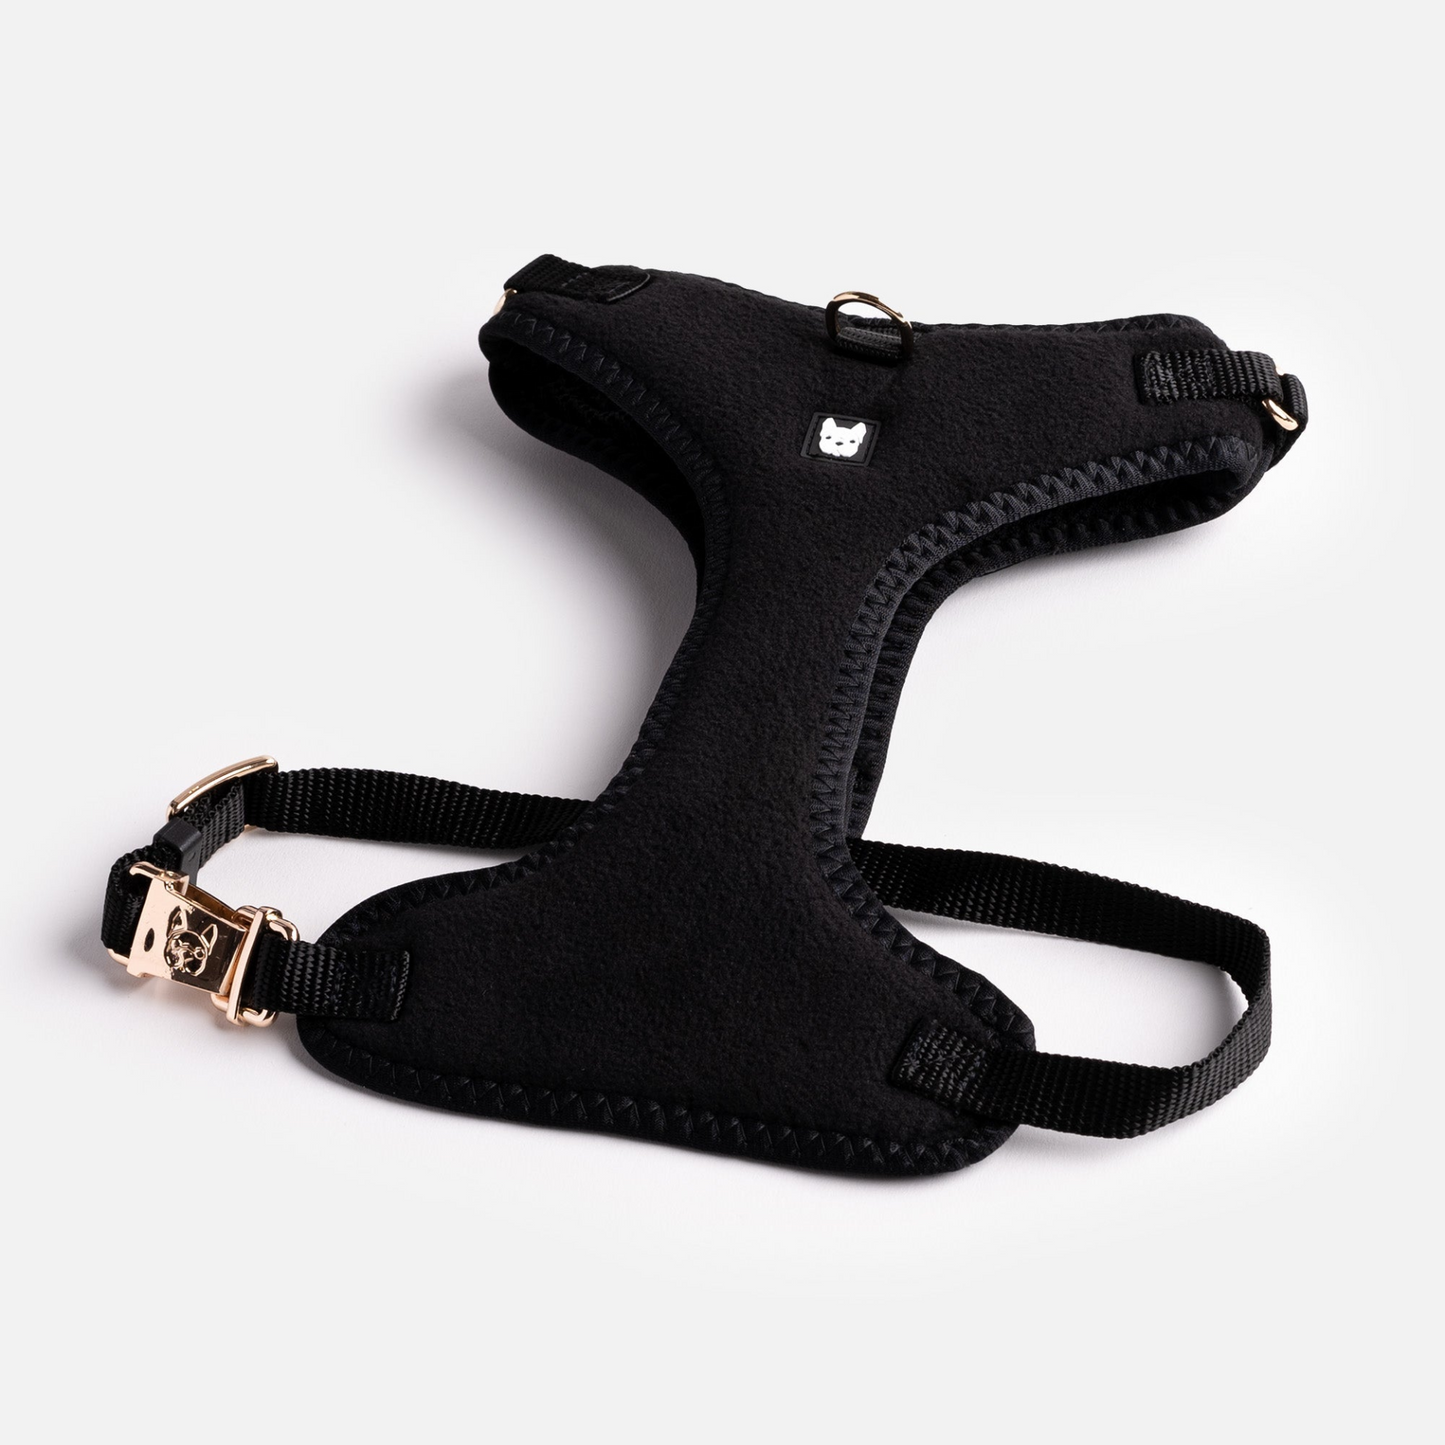 Aquafleece Dog Harness - Black